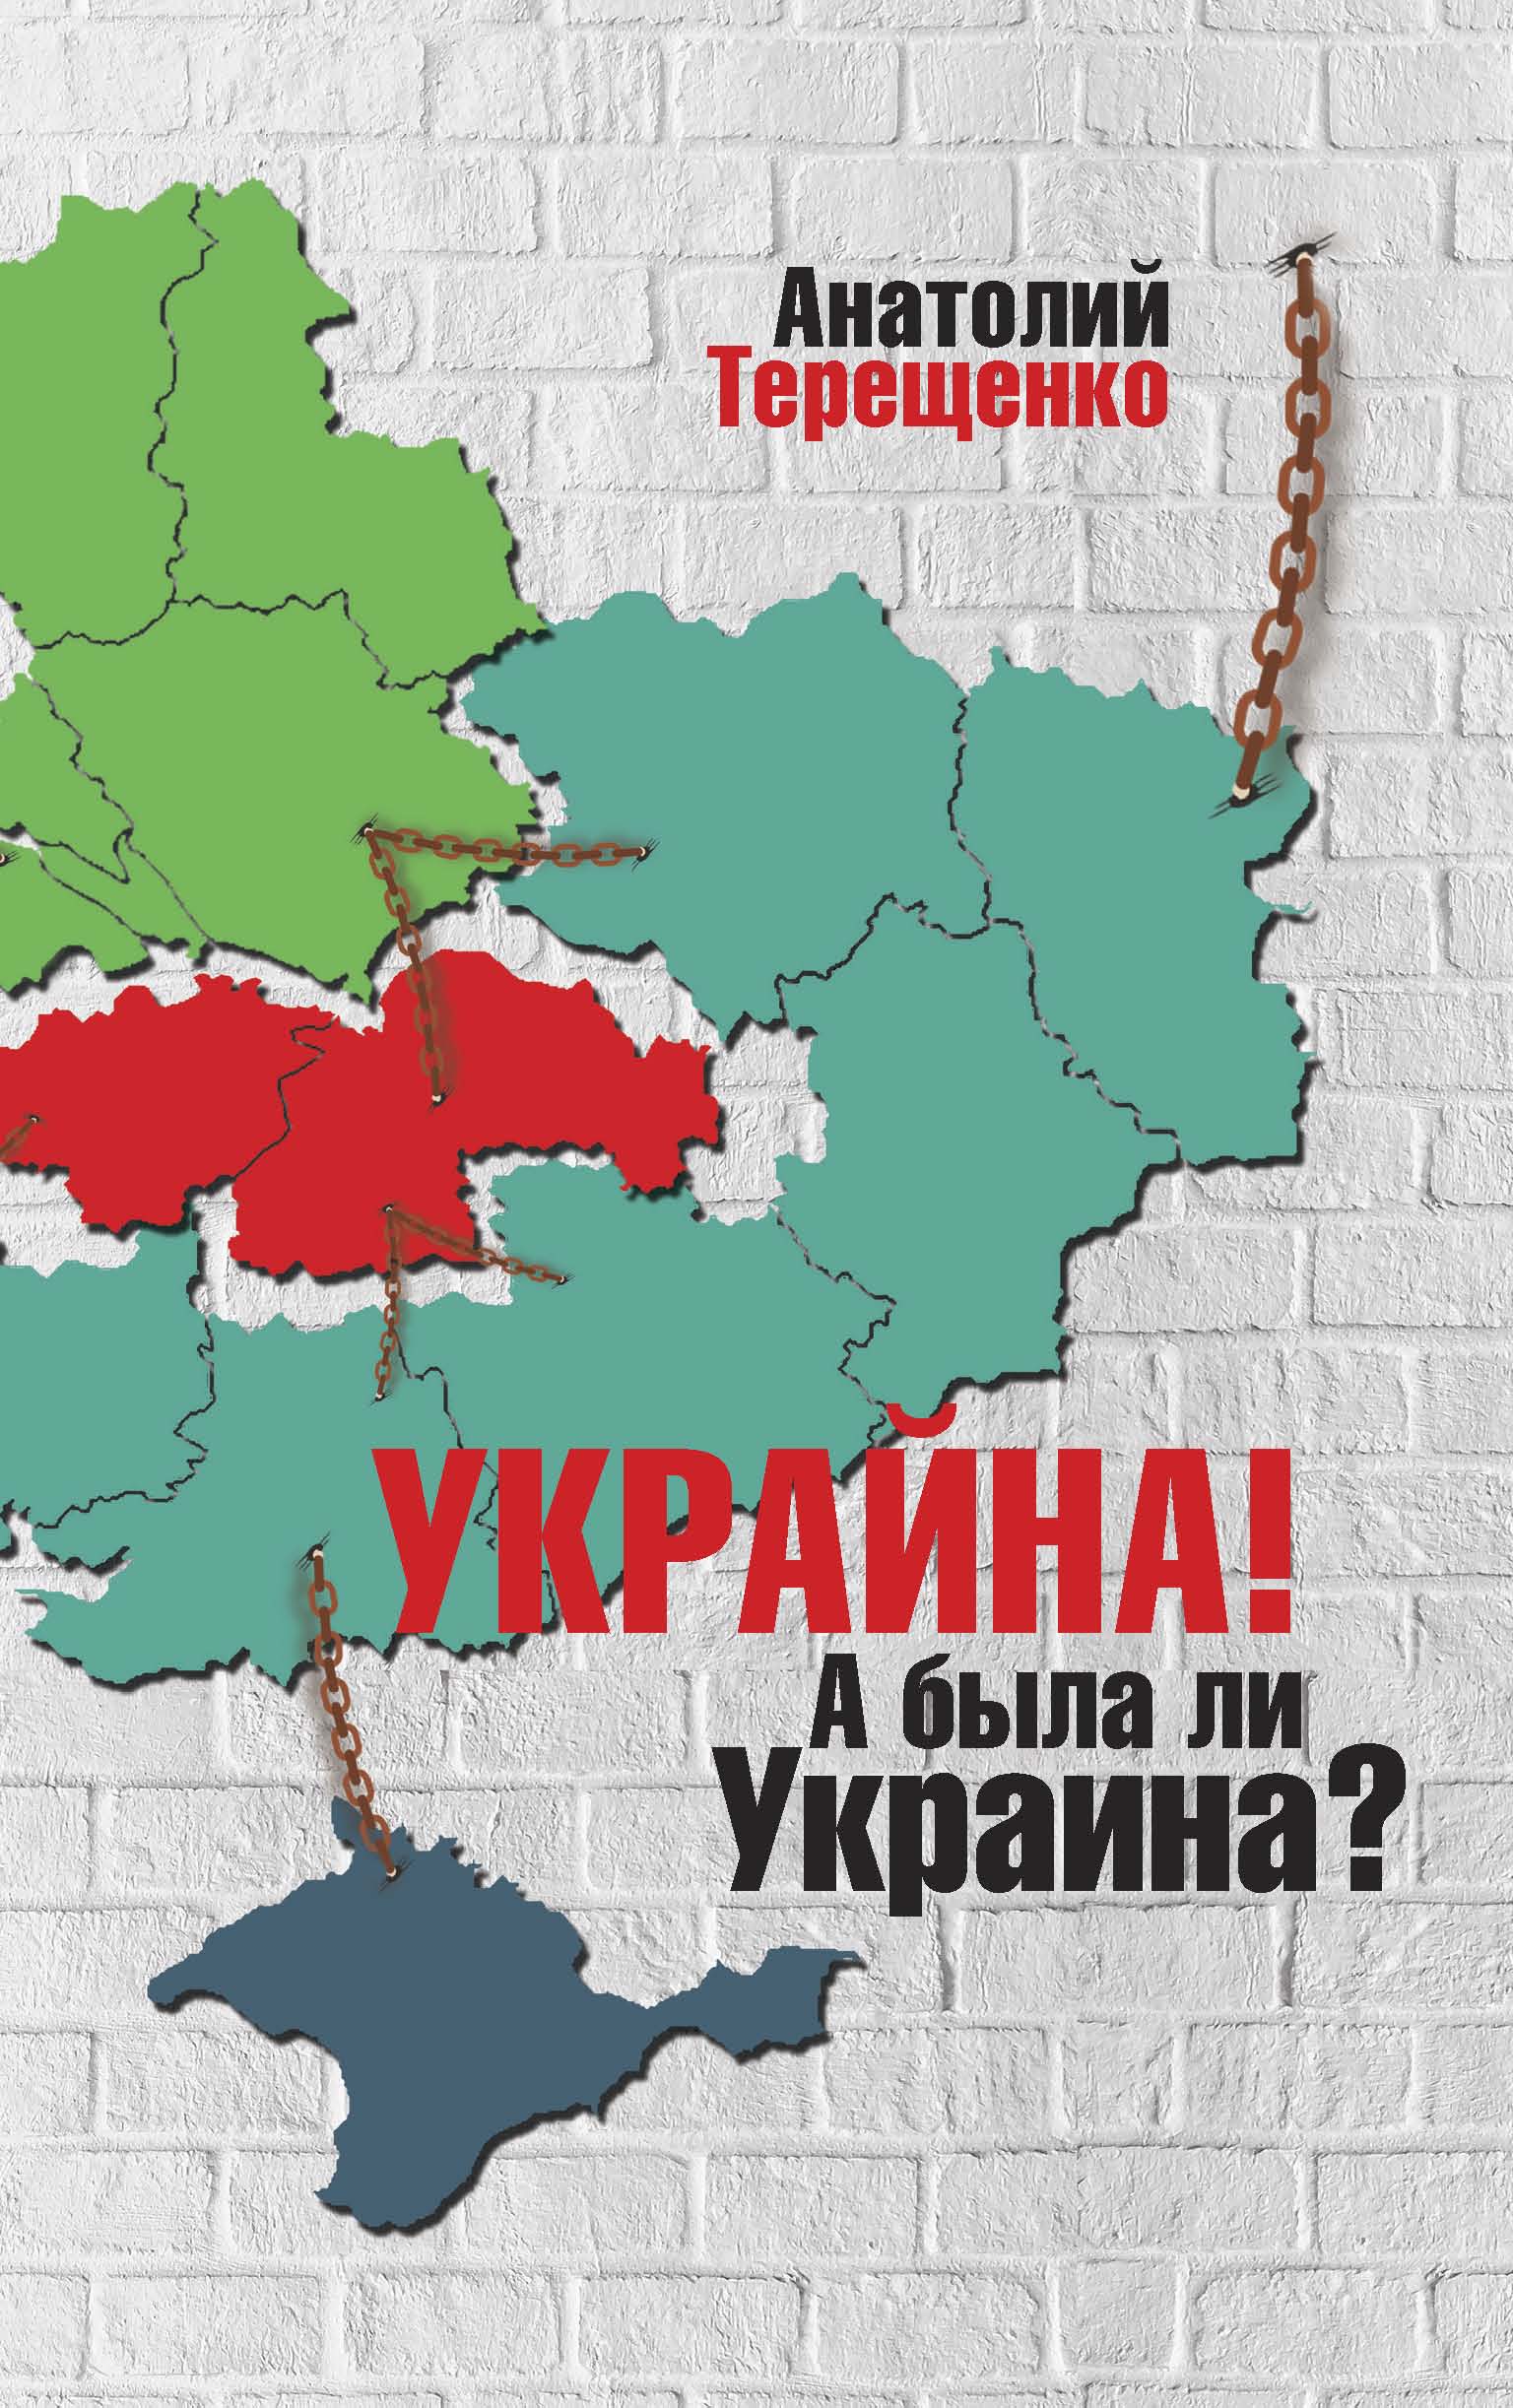 Украйна! А была ли Украина?